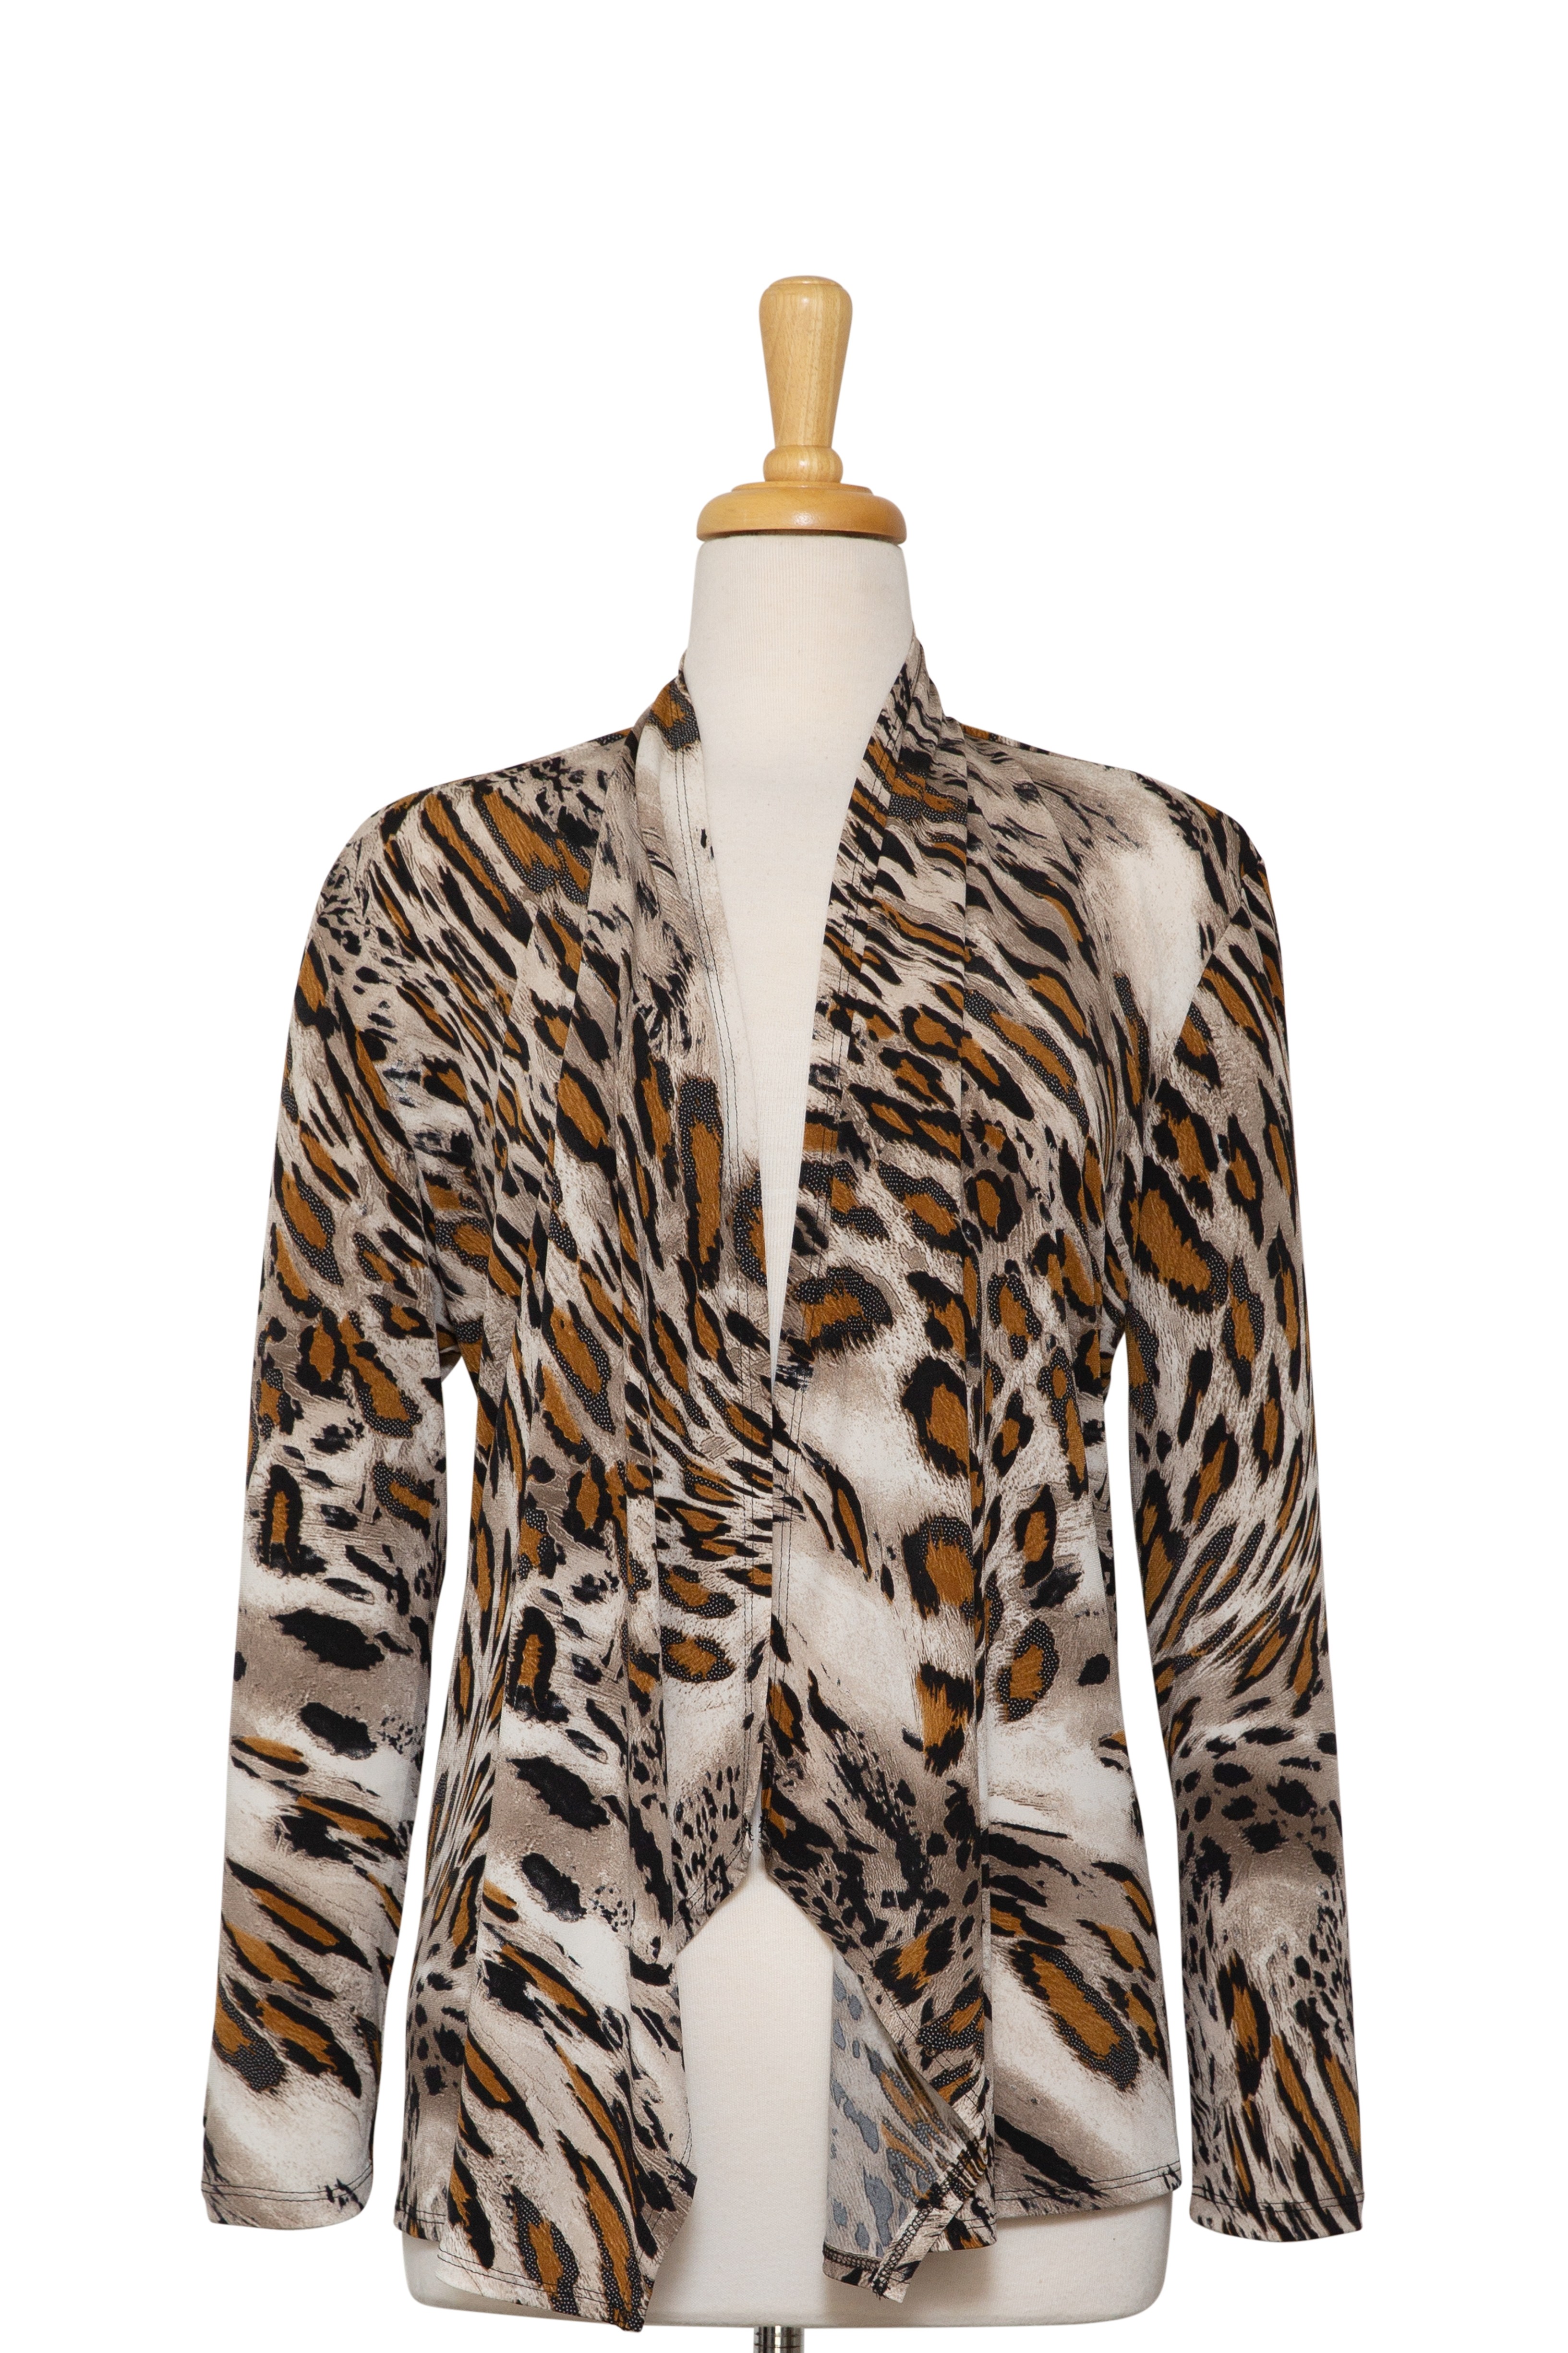 Plus Size Creme, Tan and Taupe Leopard Print Microfiber Shawl Collar Jacket